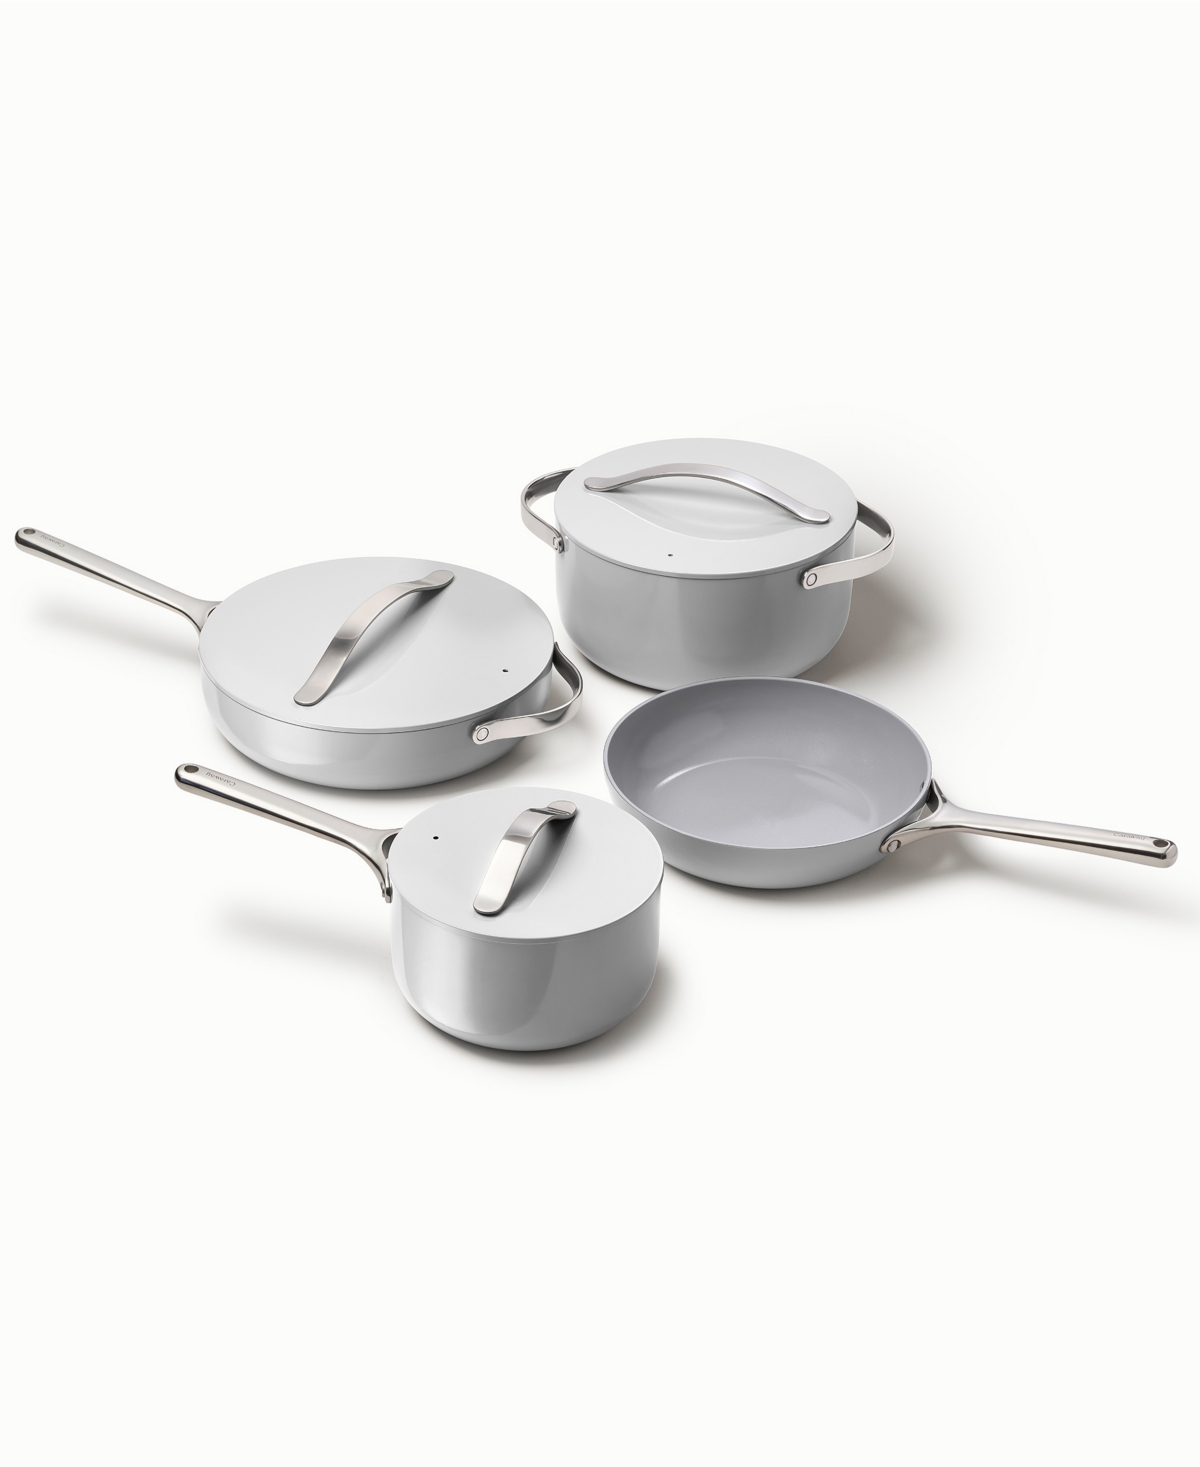 Caraway Aluminum Non-toxic Ceramic Non-stick 6 Piece Cookware Set In Gray